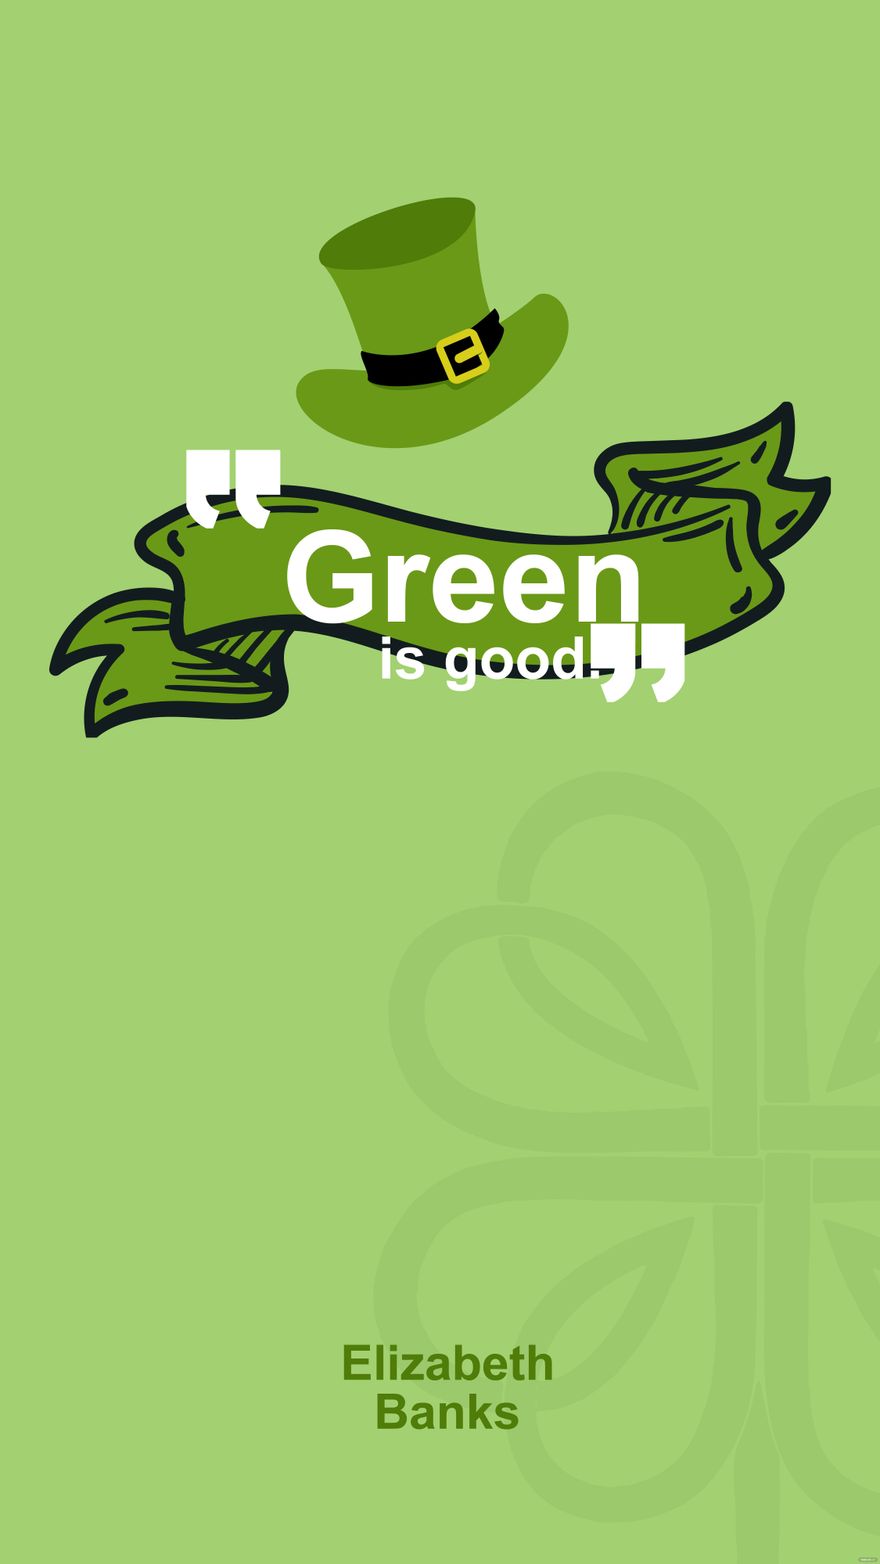 Free Elizabeth Banks - Green is good.” in JPEG